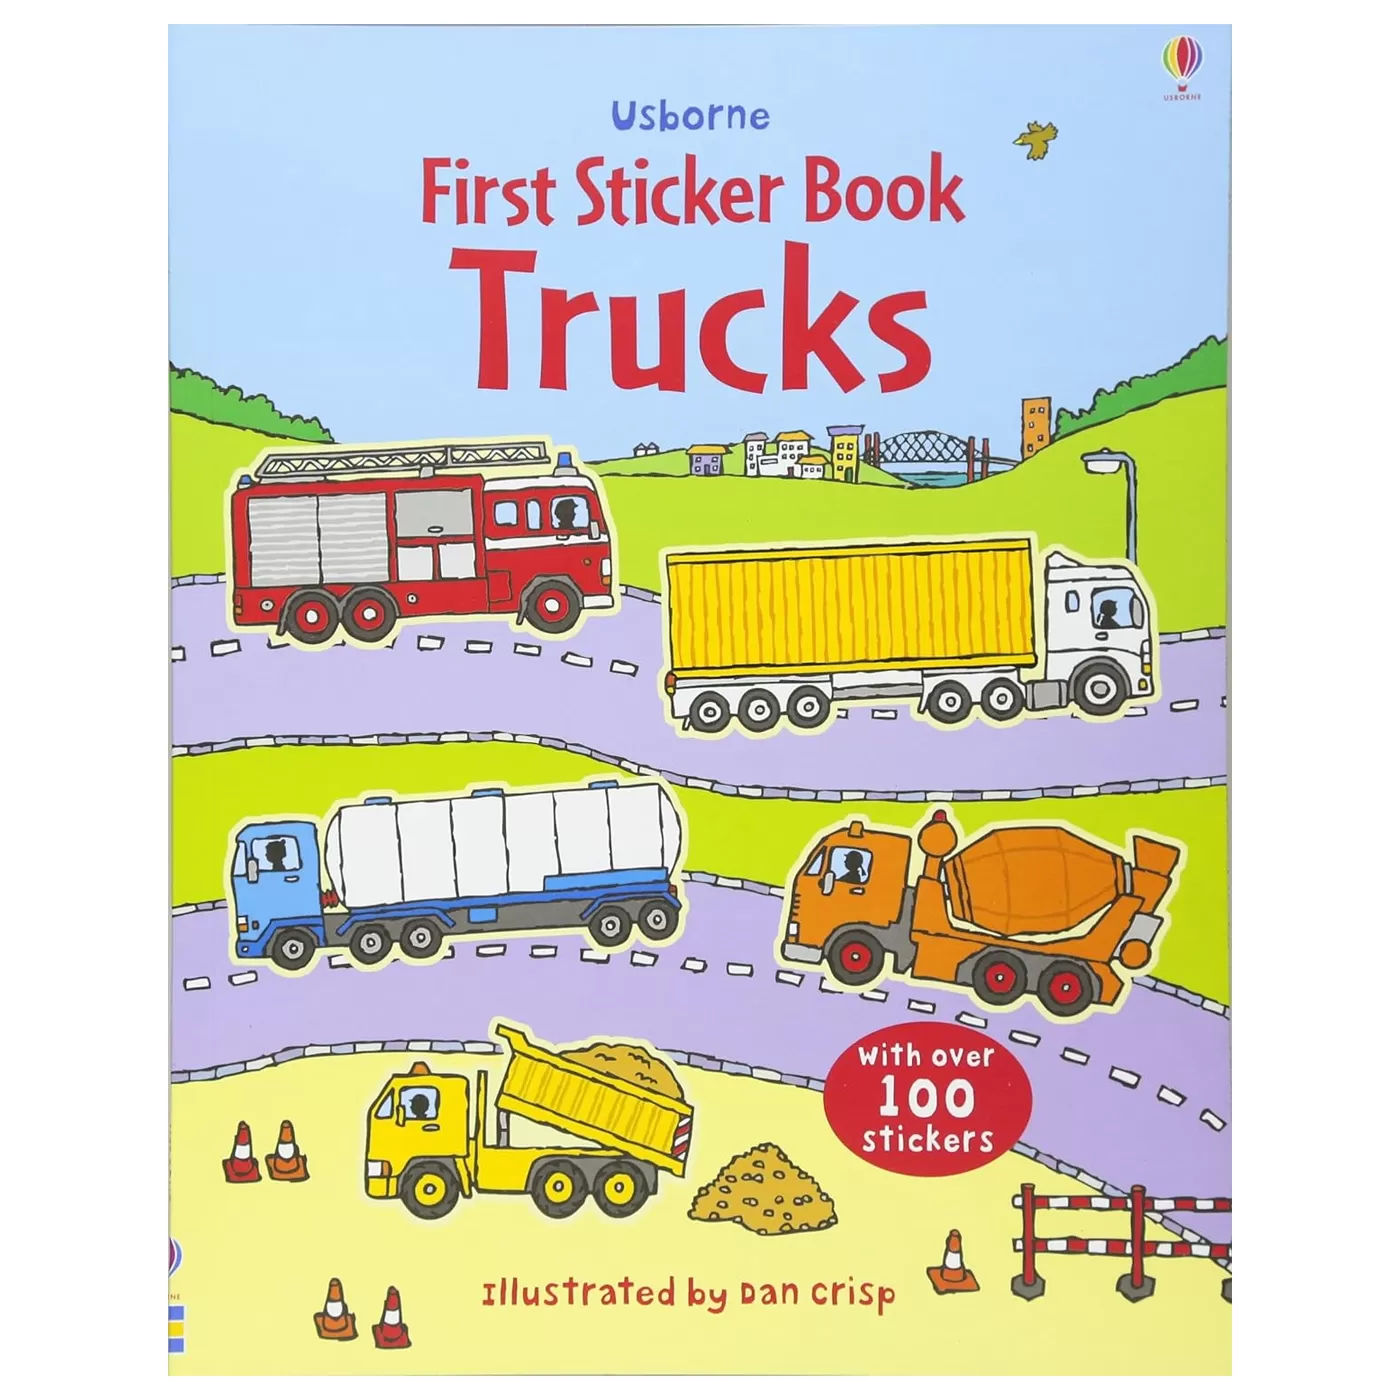  First Sticker Book Trucks